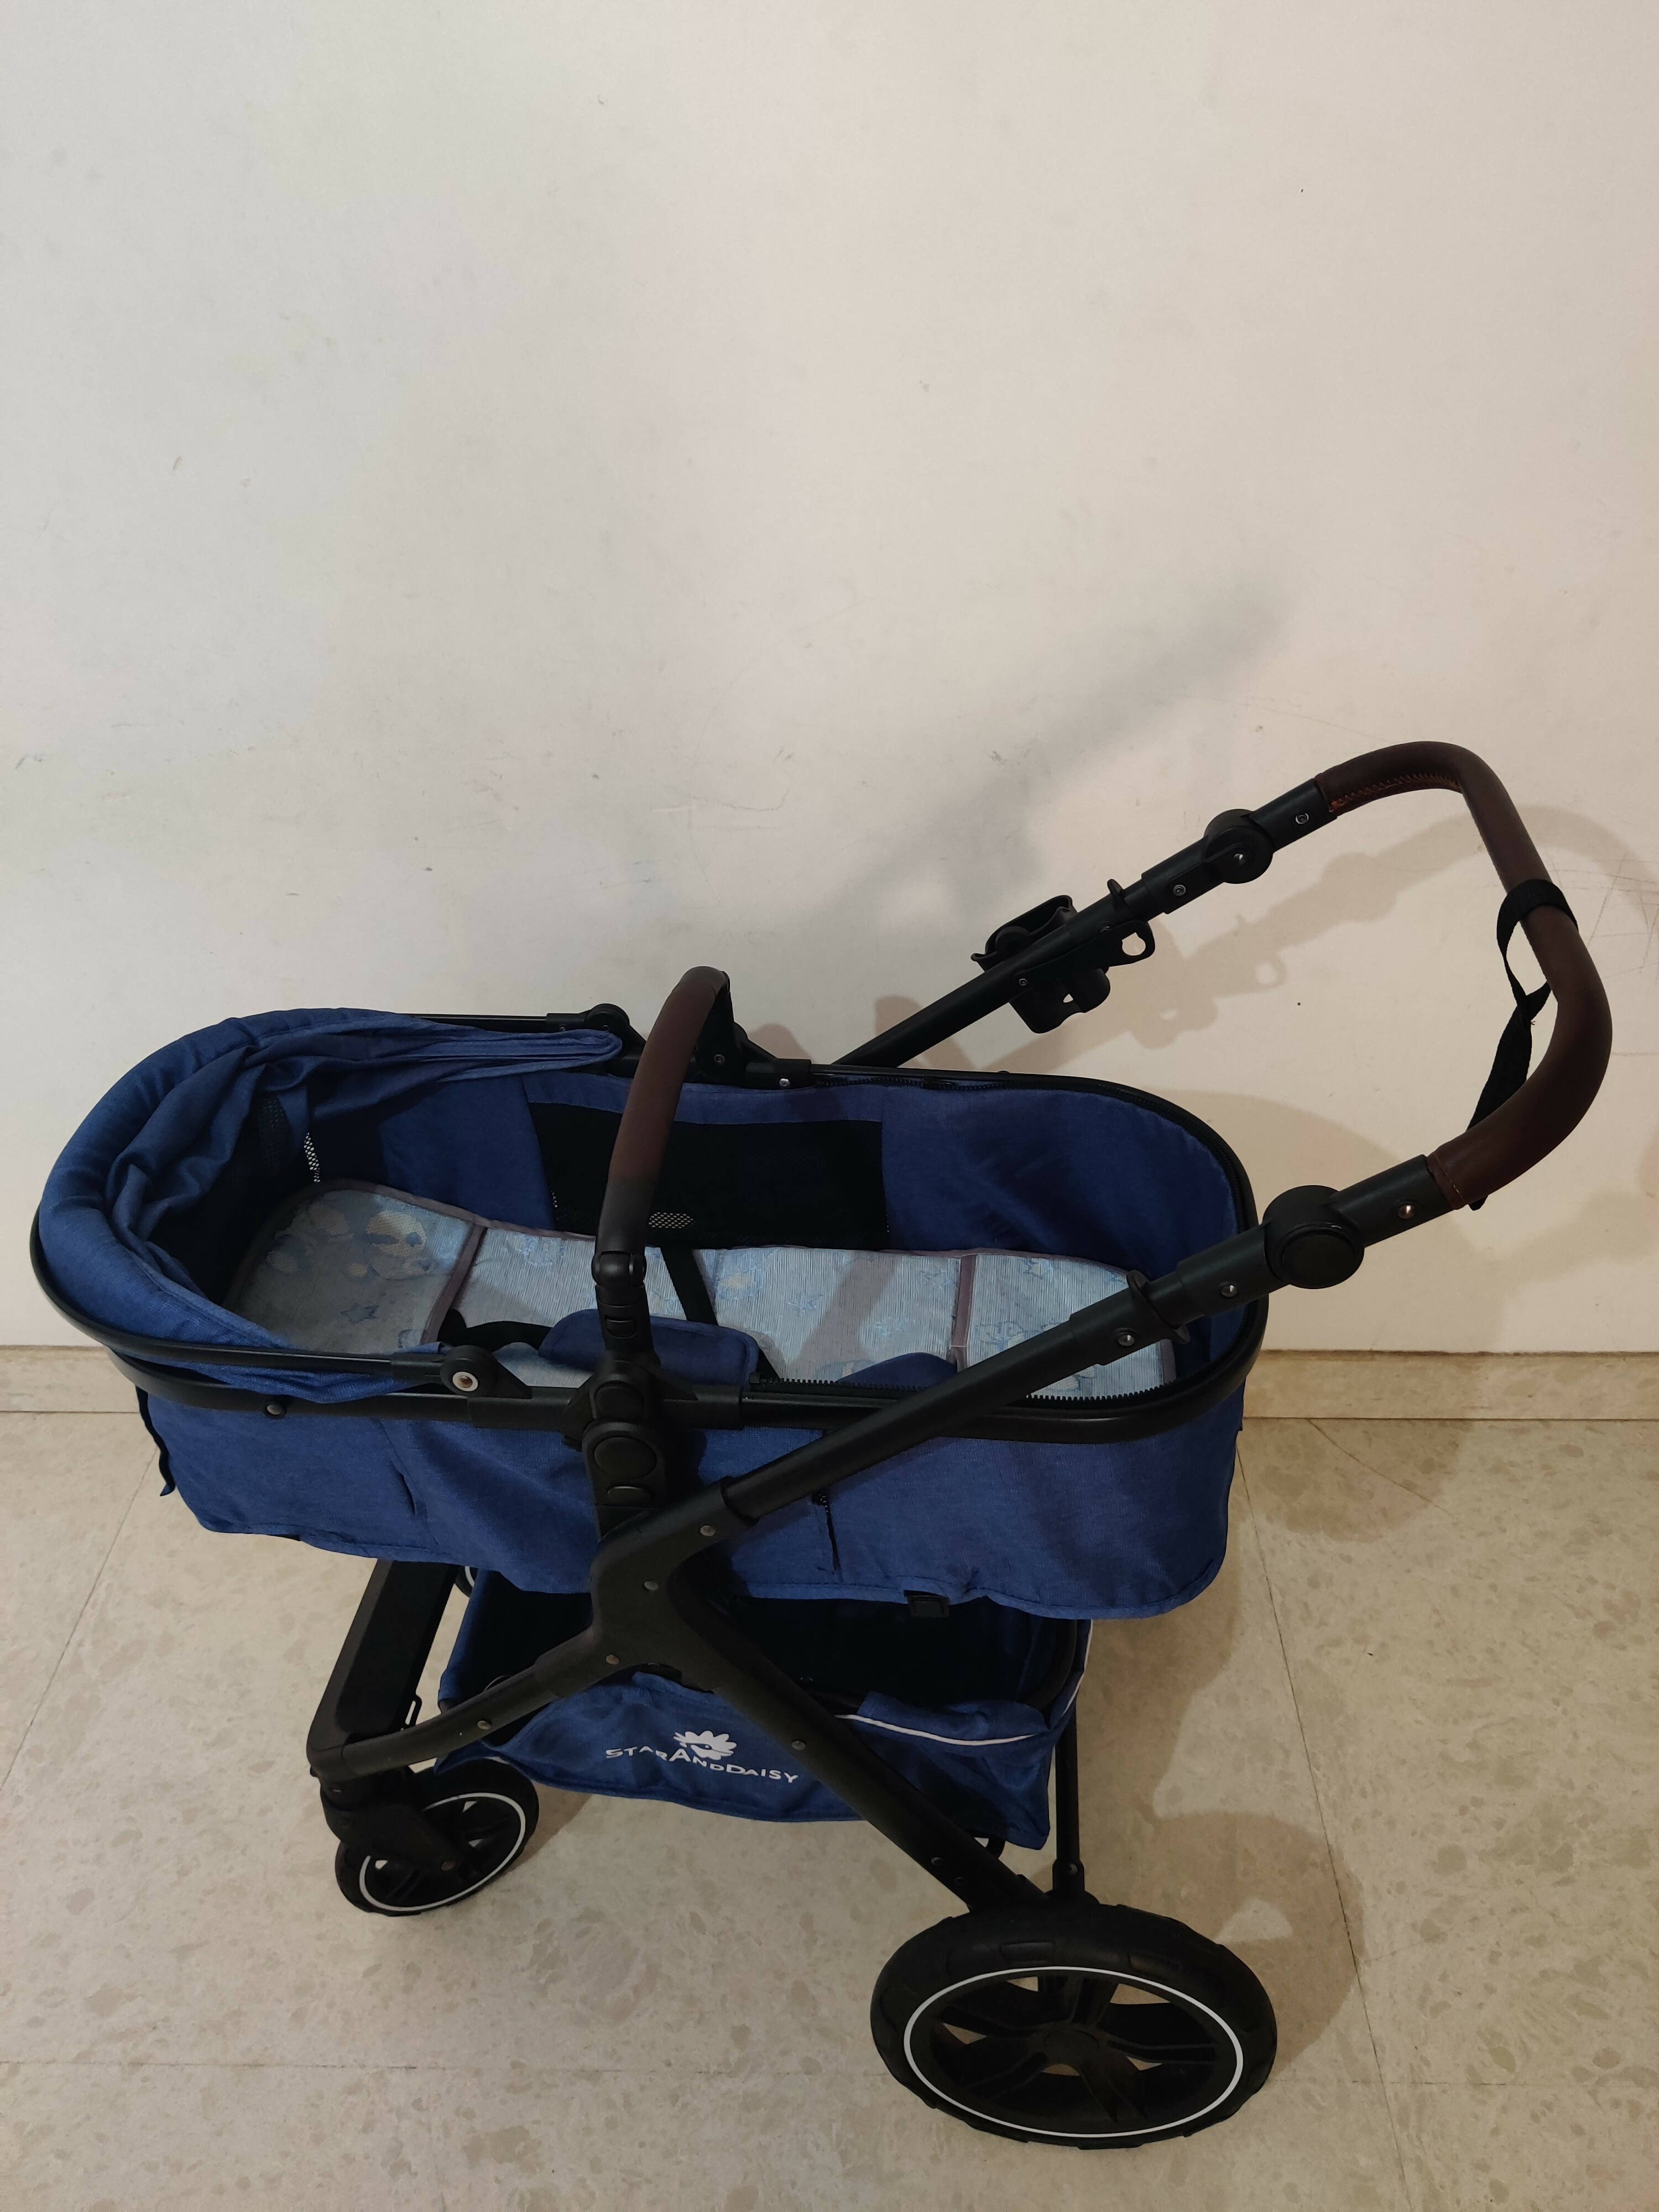 STAR AND DAISY Stroller/Pram for Baby